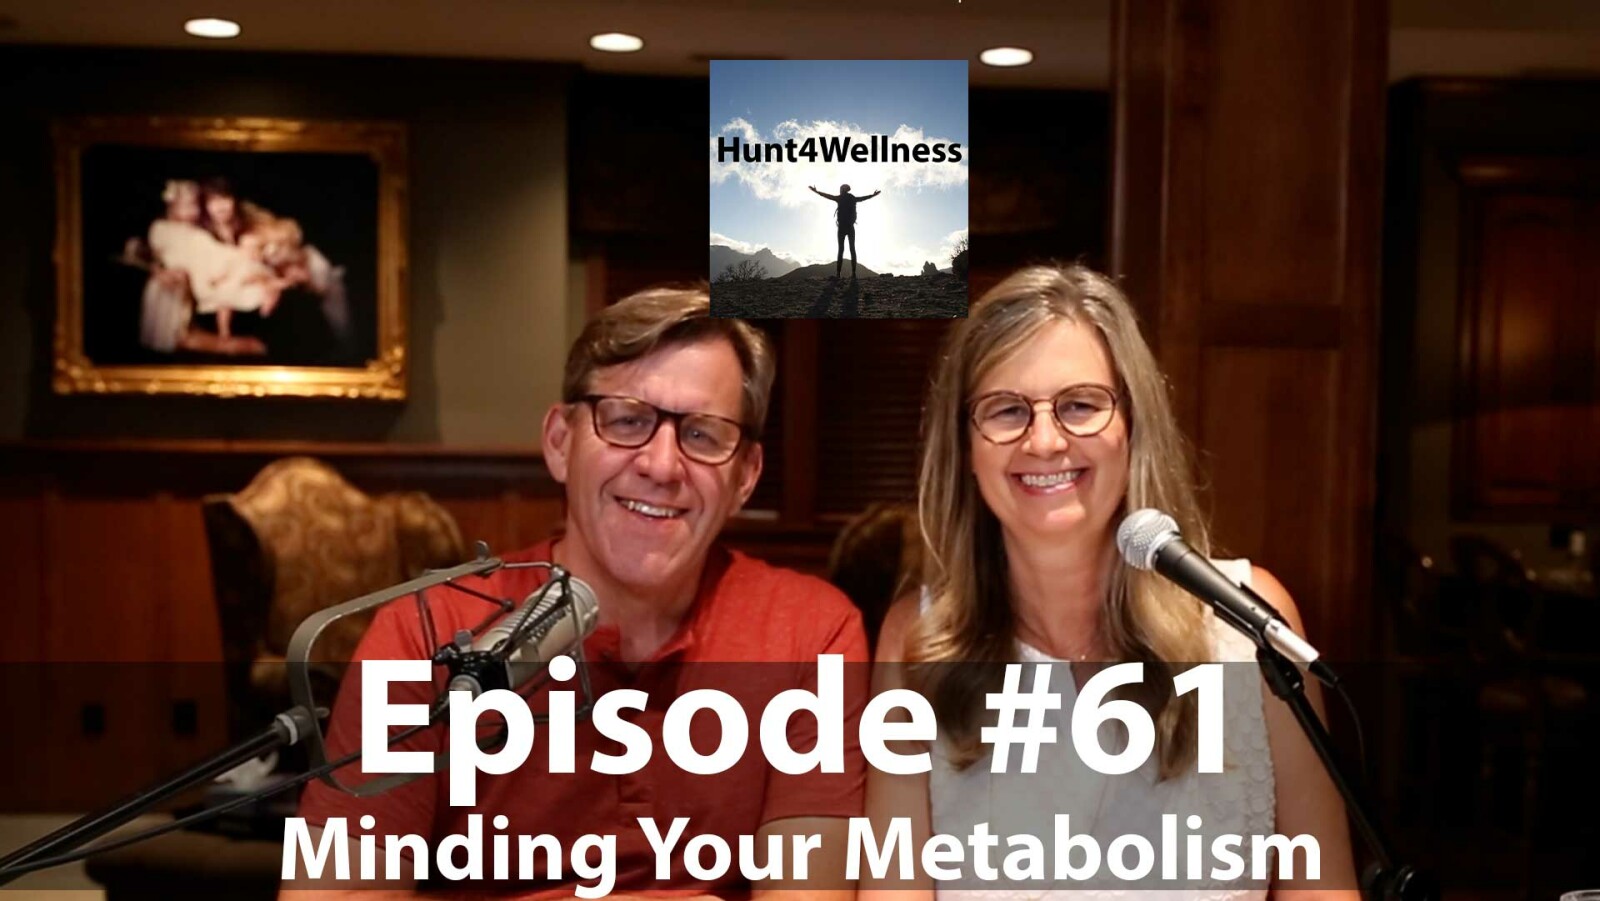 Episode #61 - Minding Your Metabolism